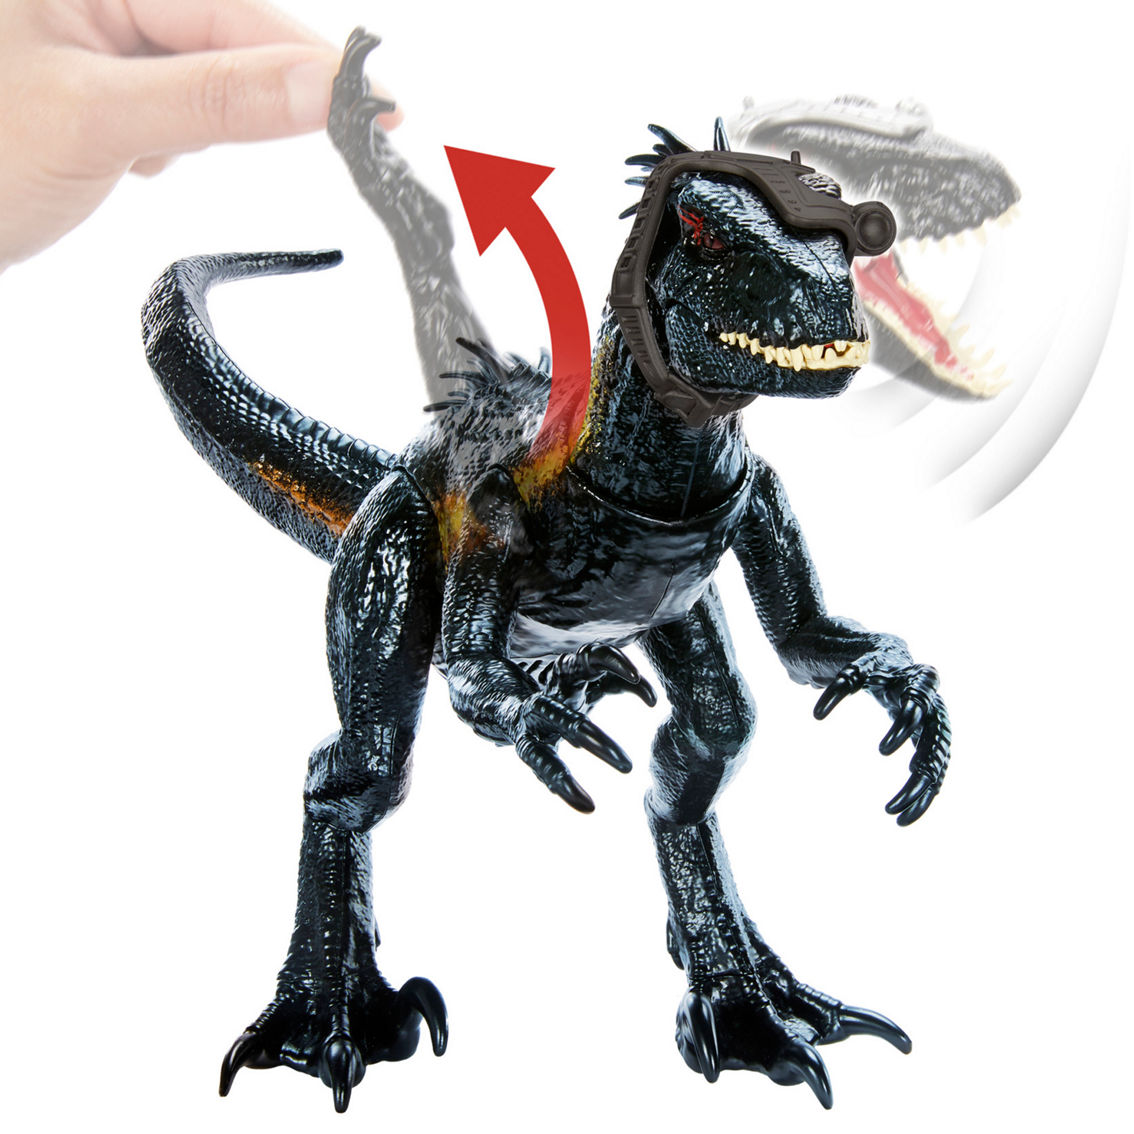 Jurassic World Fierce Changers Chase 'N Roar Tyrannosaurus Rex Toy - Image 4 of 6